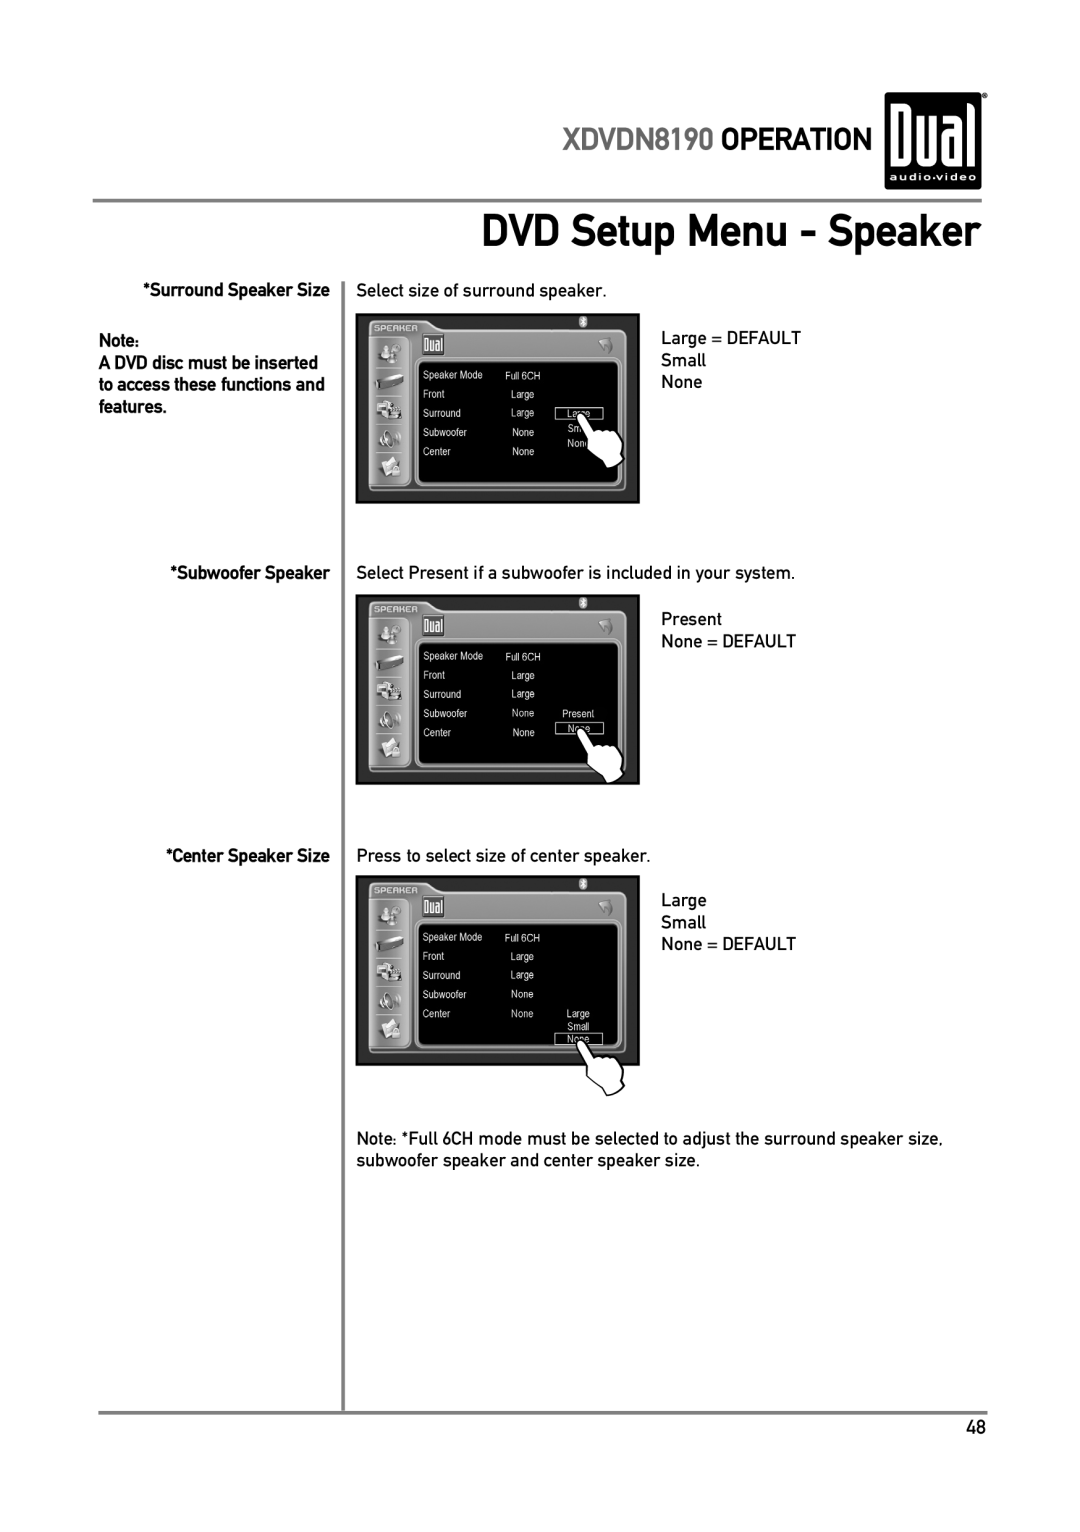 Dual owner manual DVD Setup Menu - Speaker, XDVDN8190 OPERATION, Surround Speaker Size 